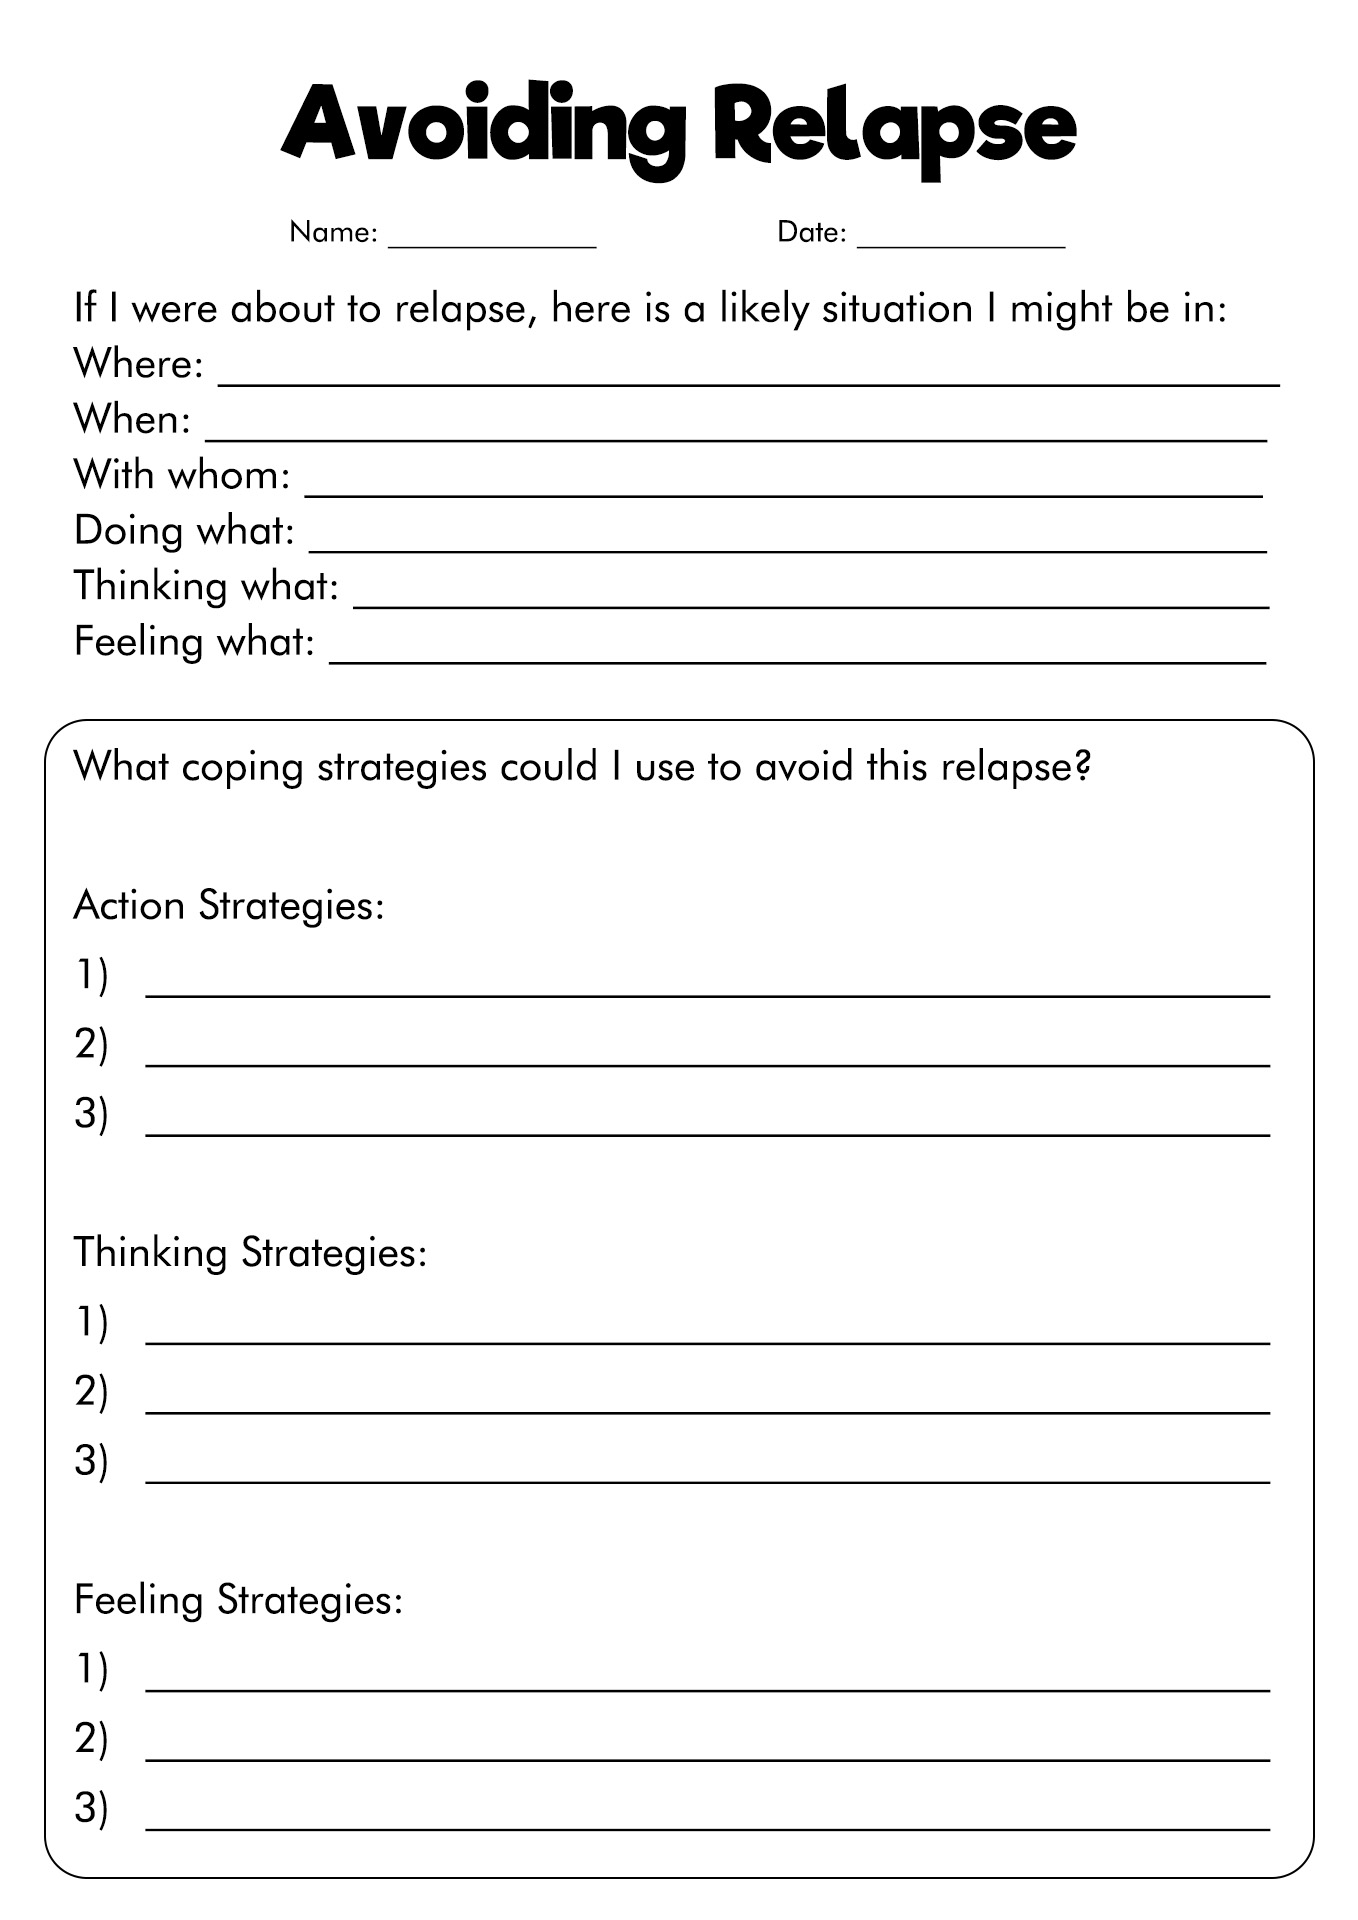 Relapse Prevention Plan Worksheets Image